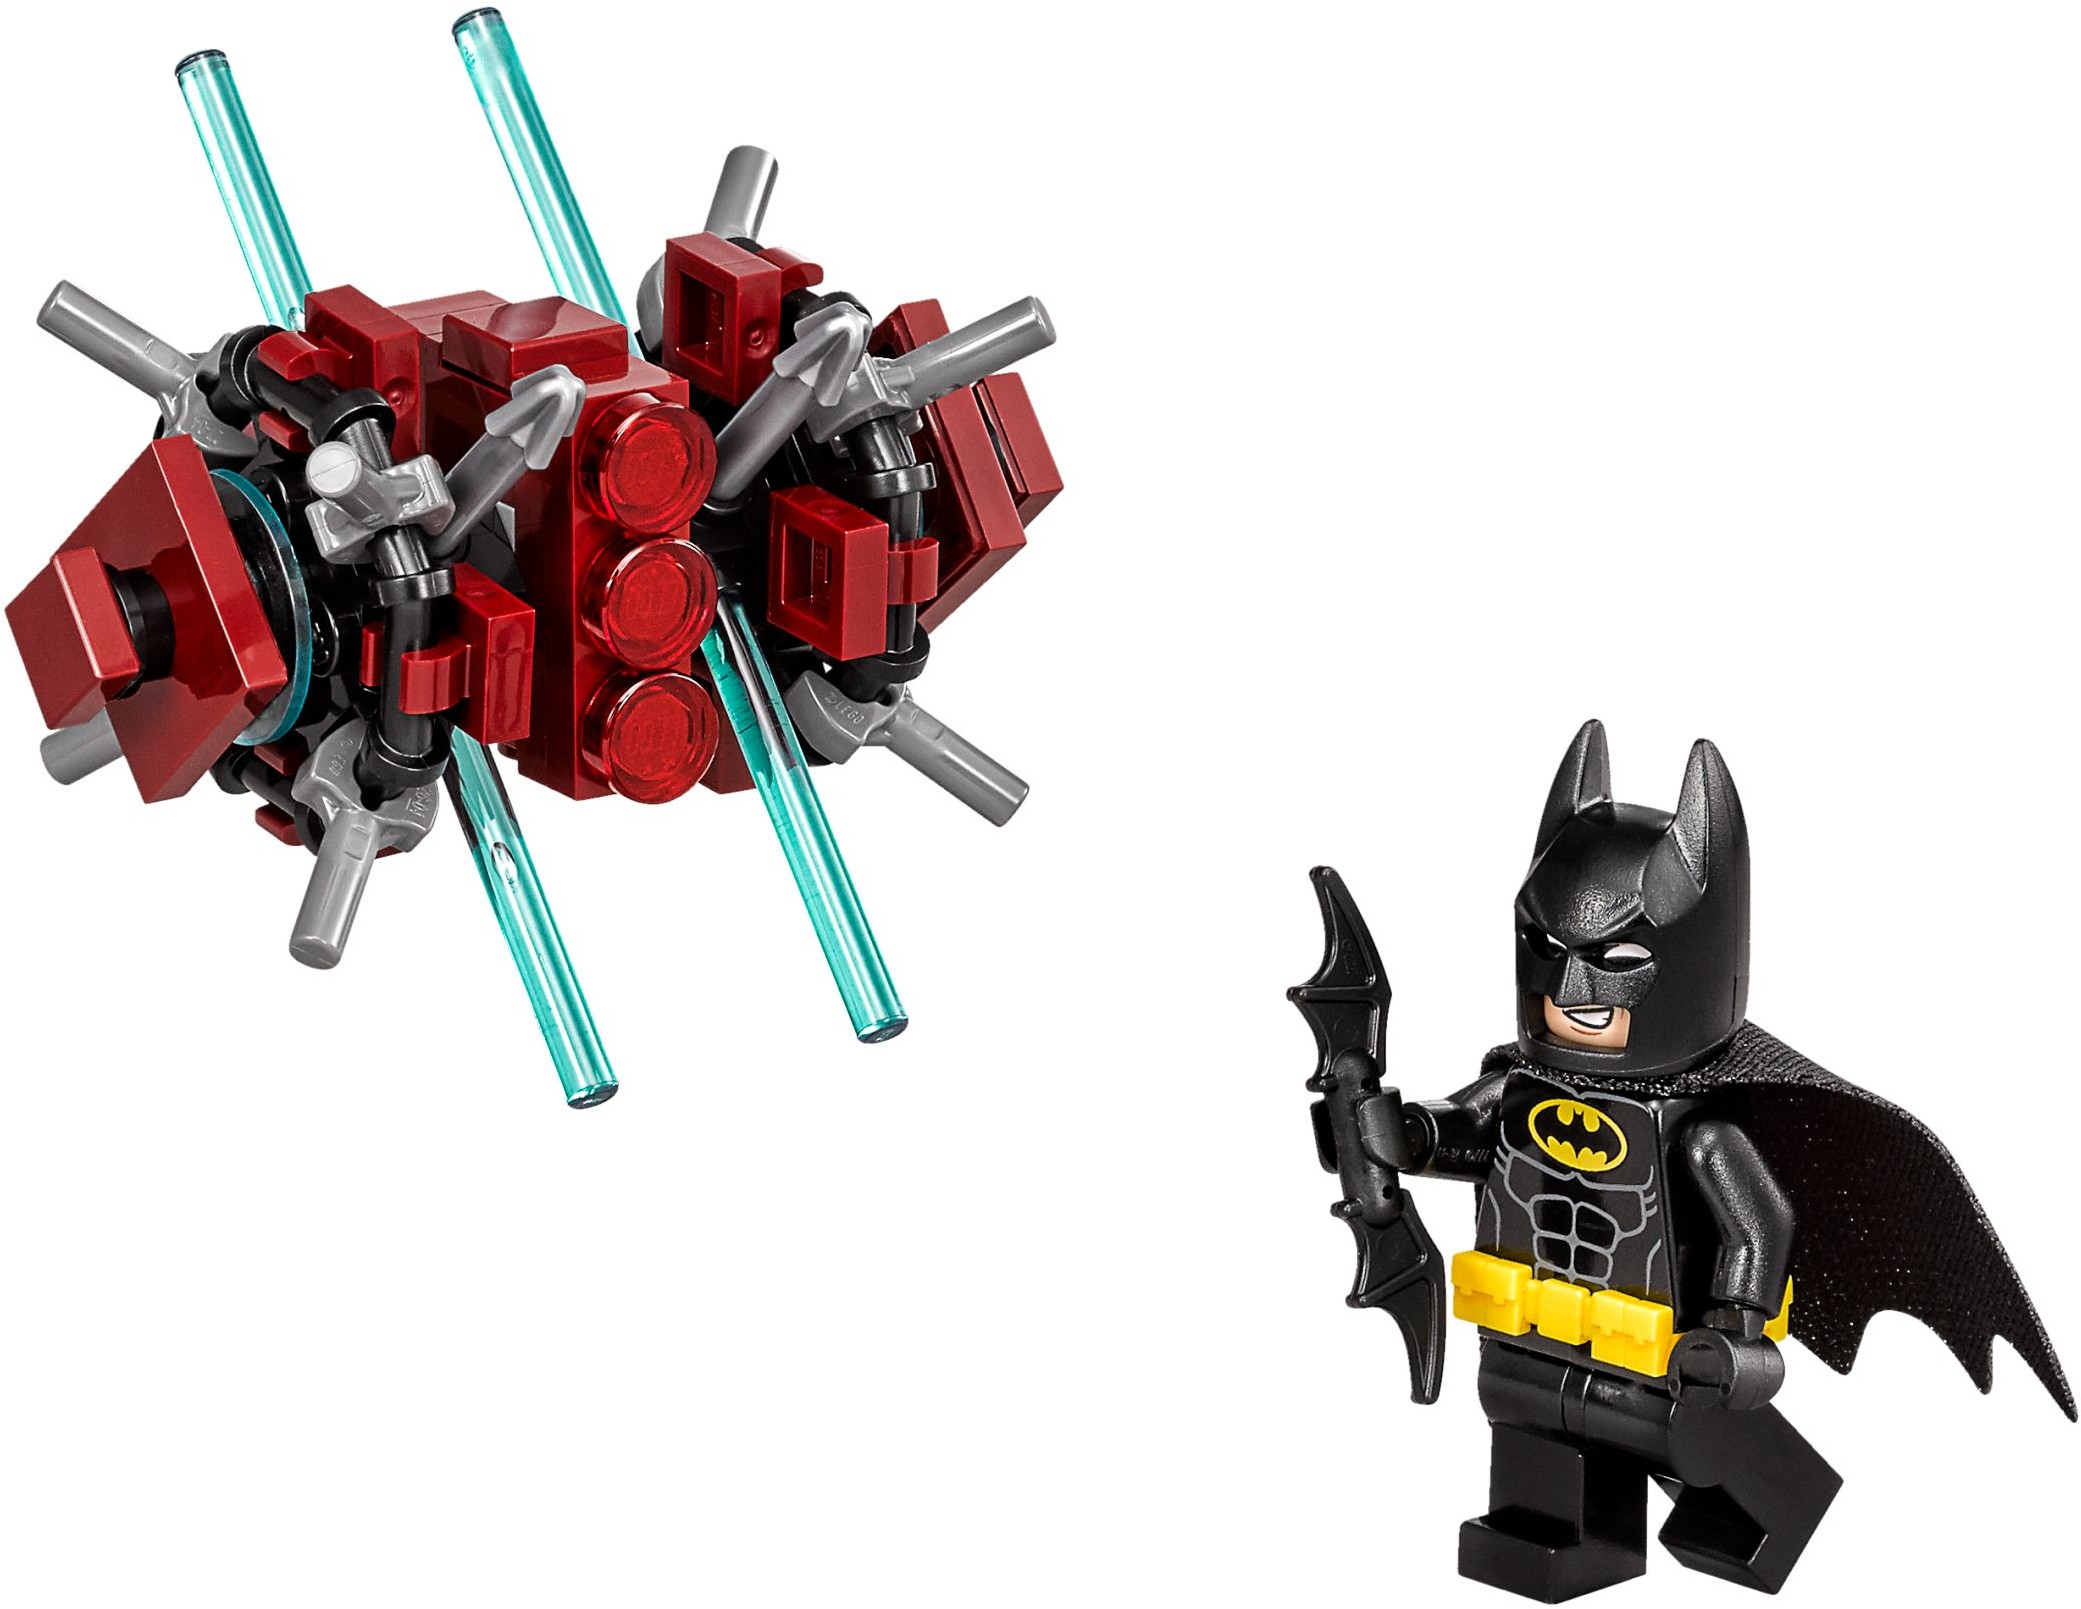 The LEGO Batman Movie is the Batman movie to look forward to